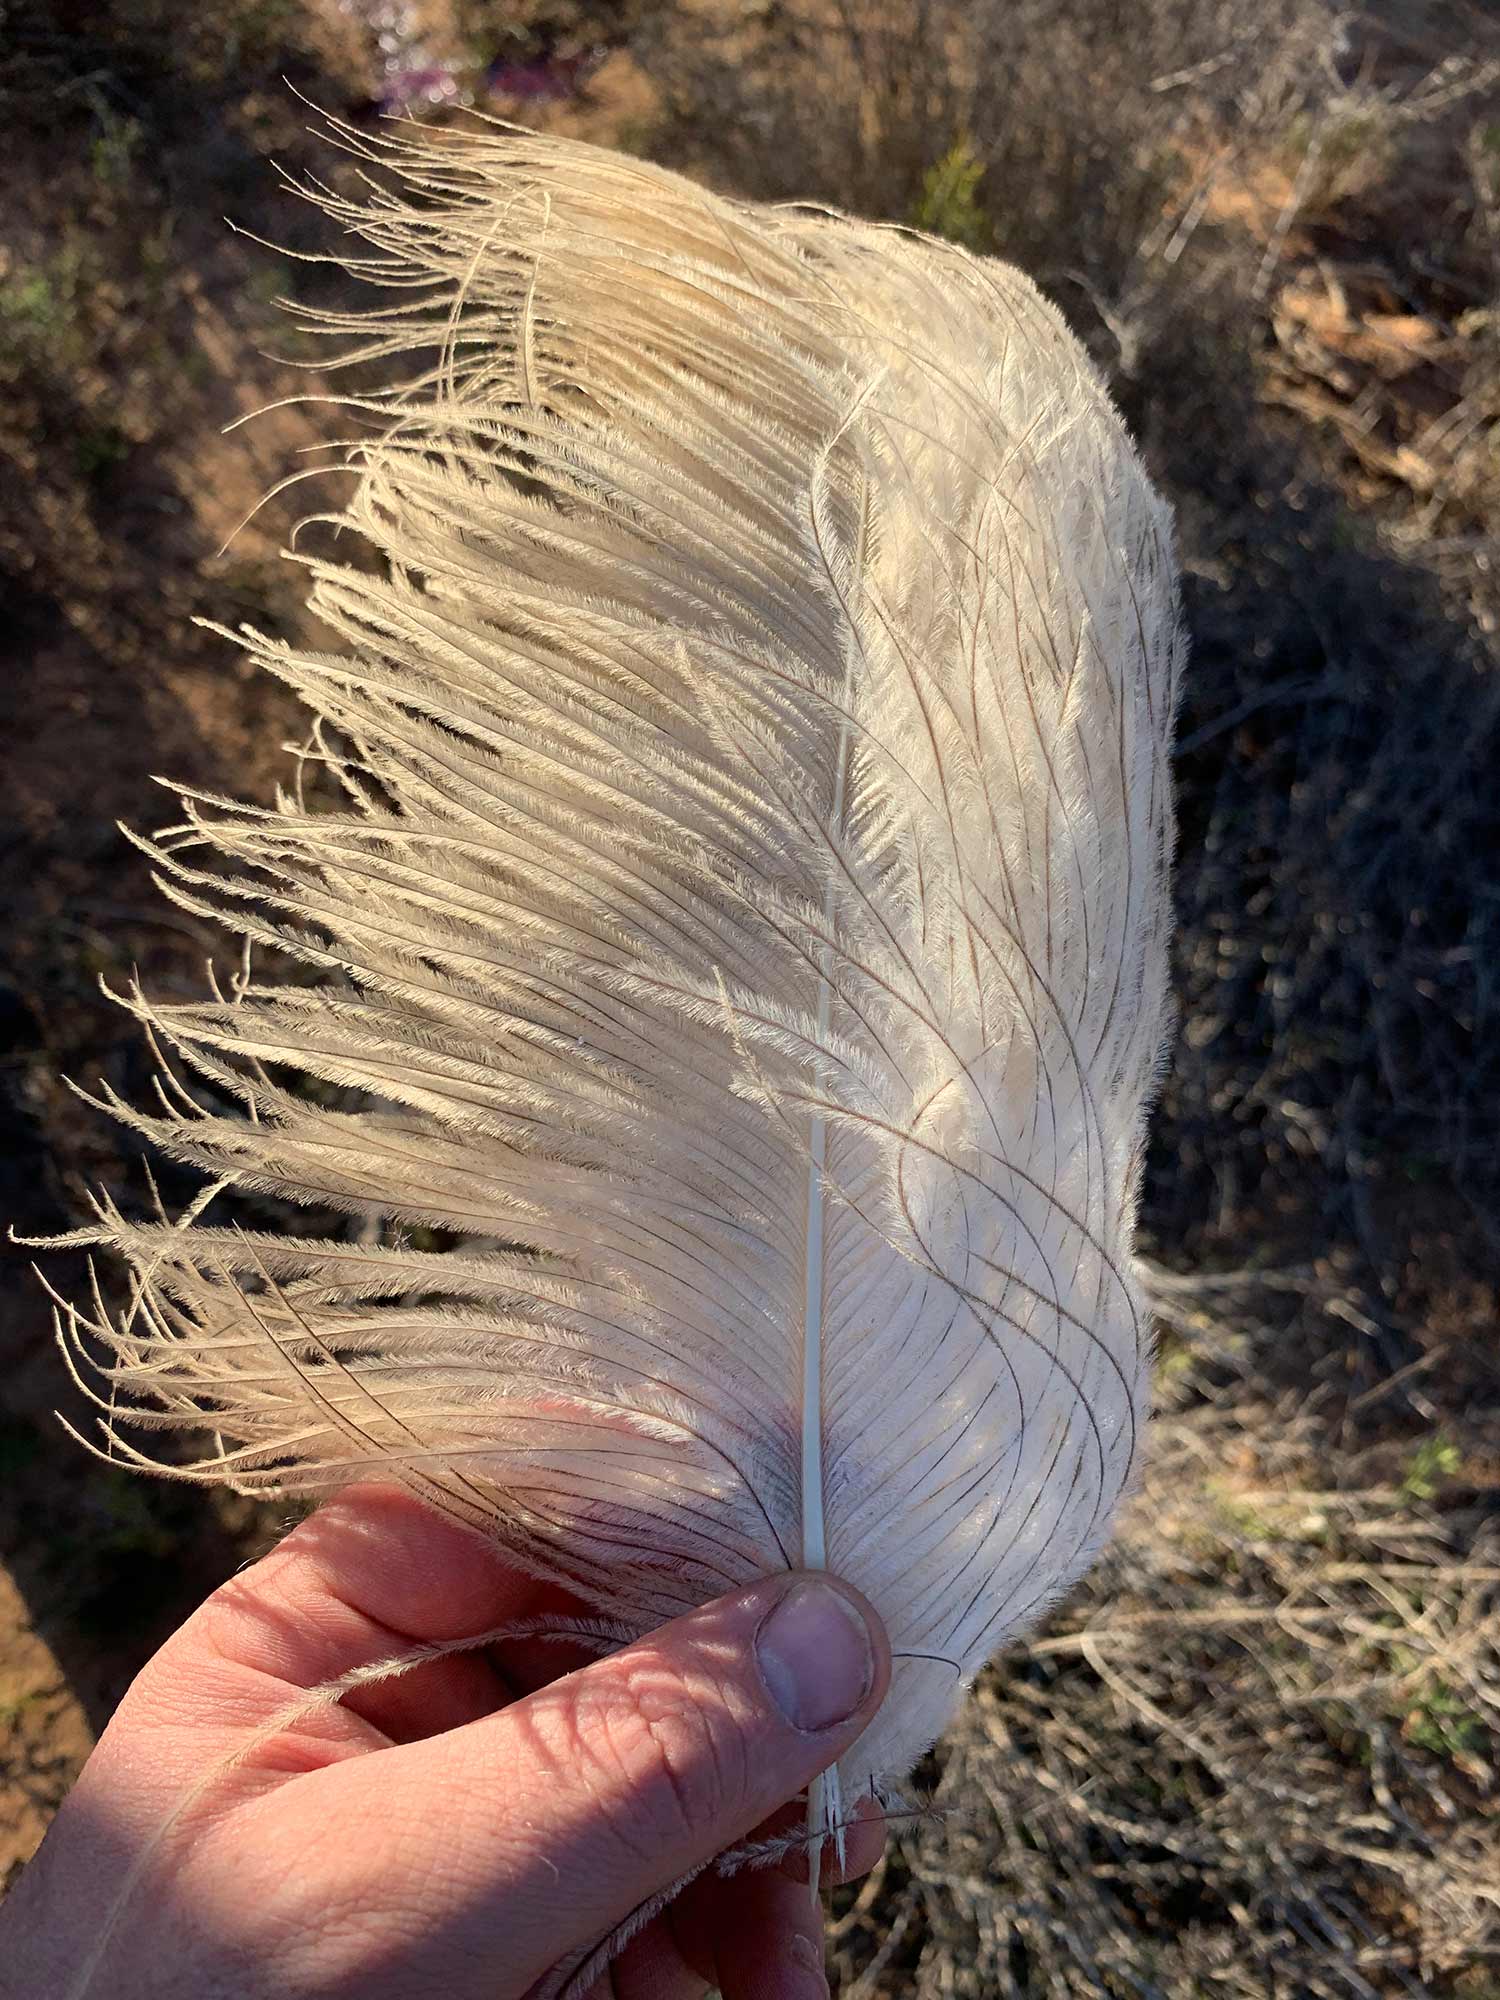 A hand holding an ostrich feather.